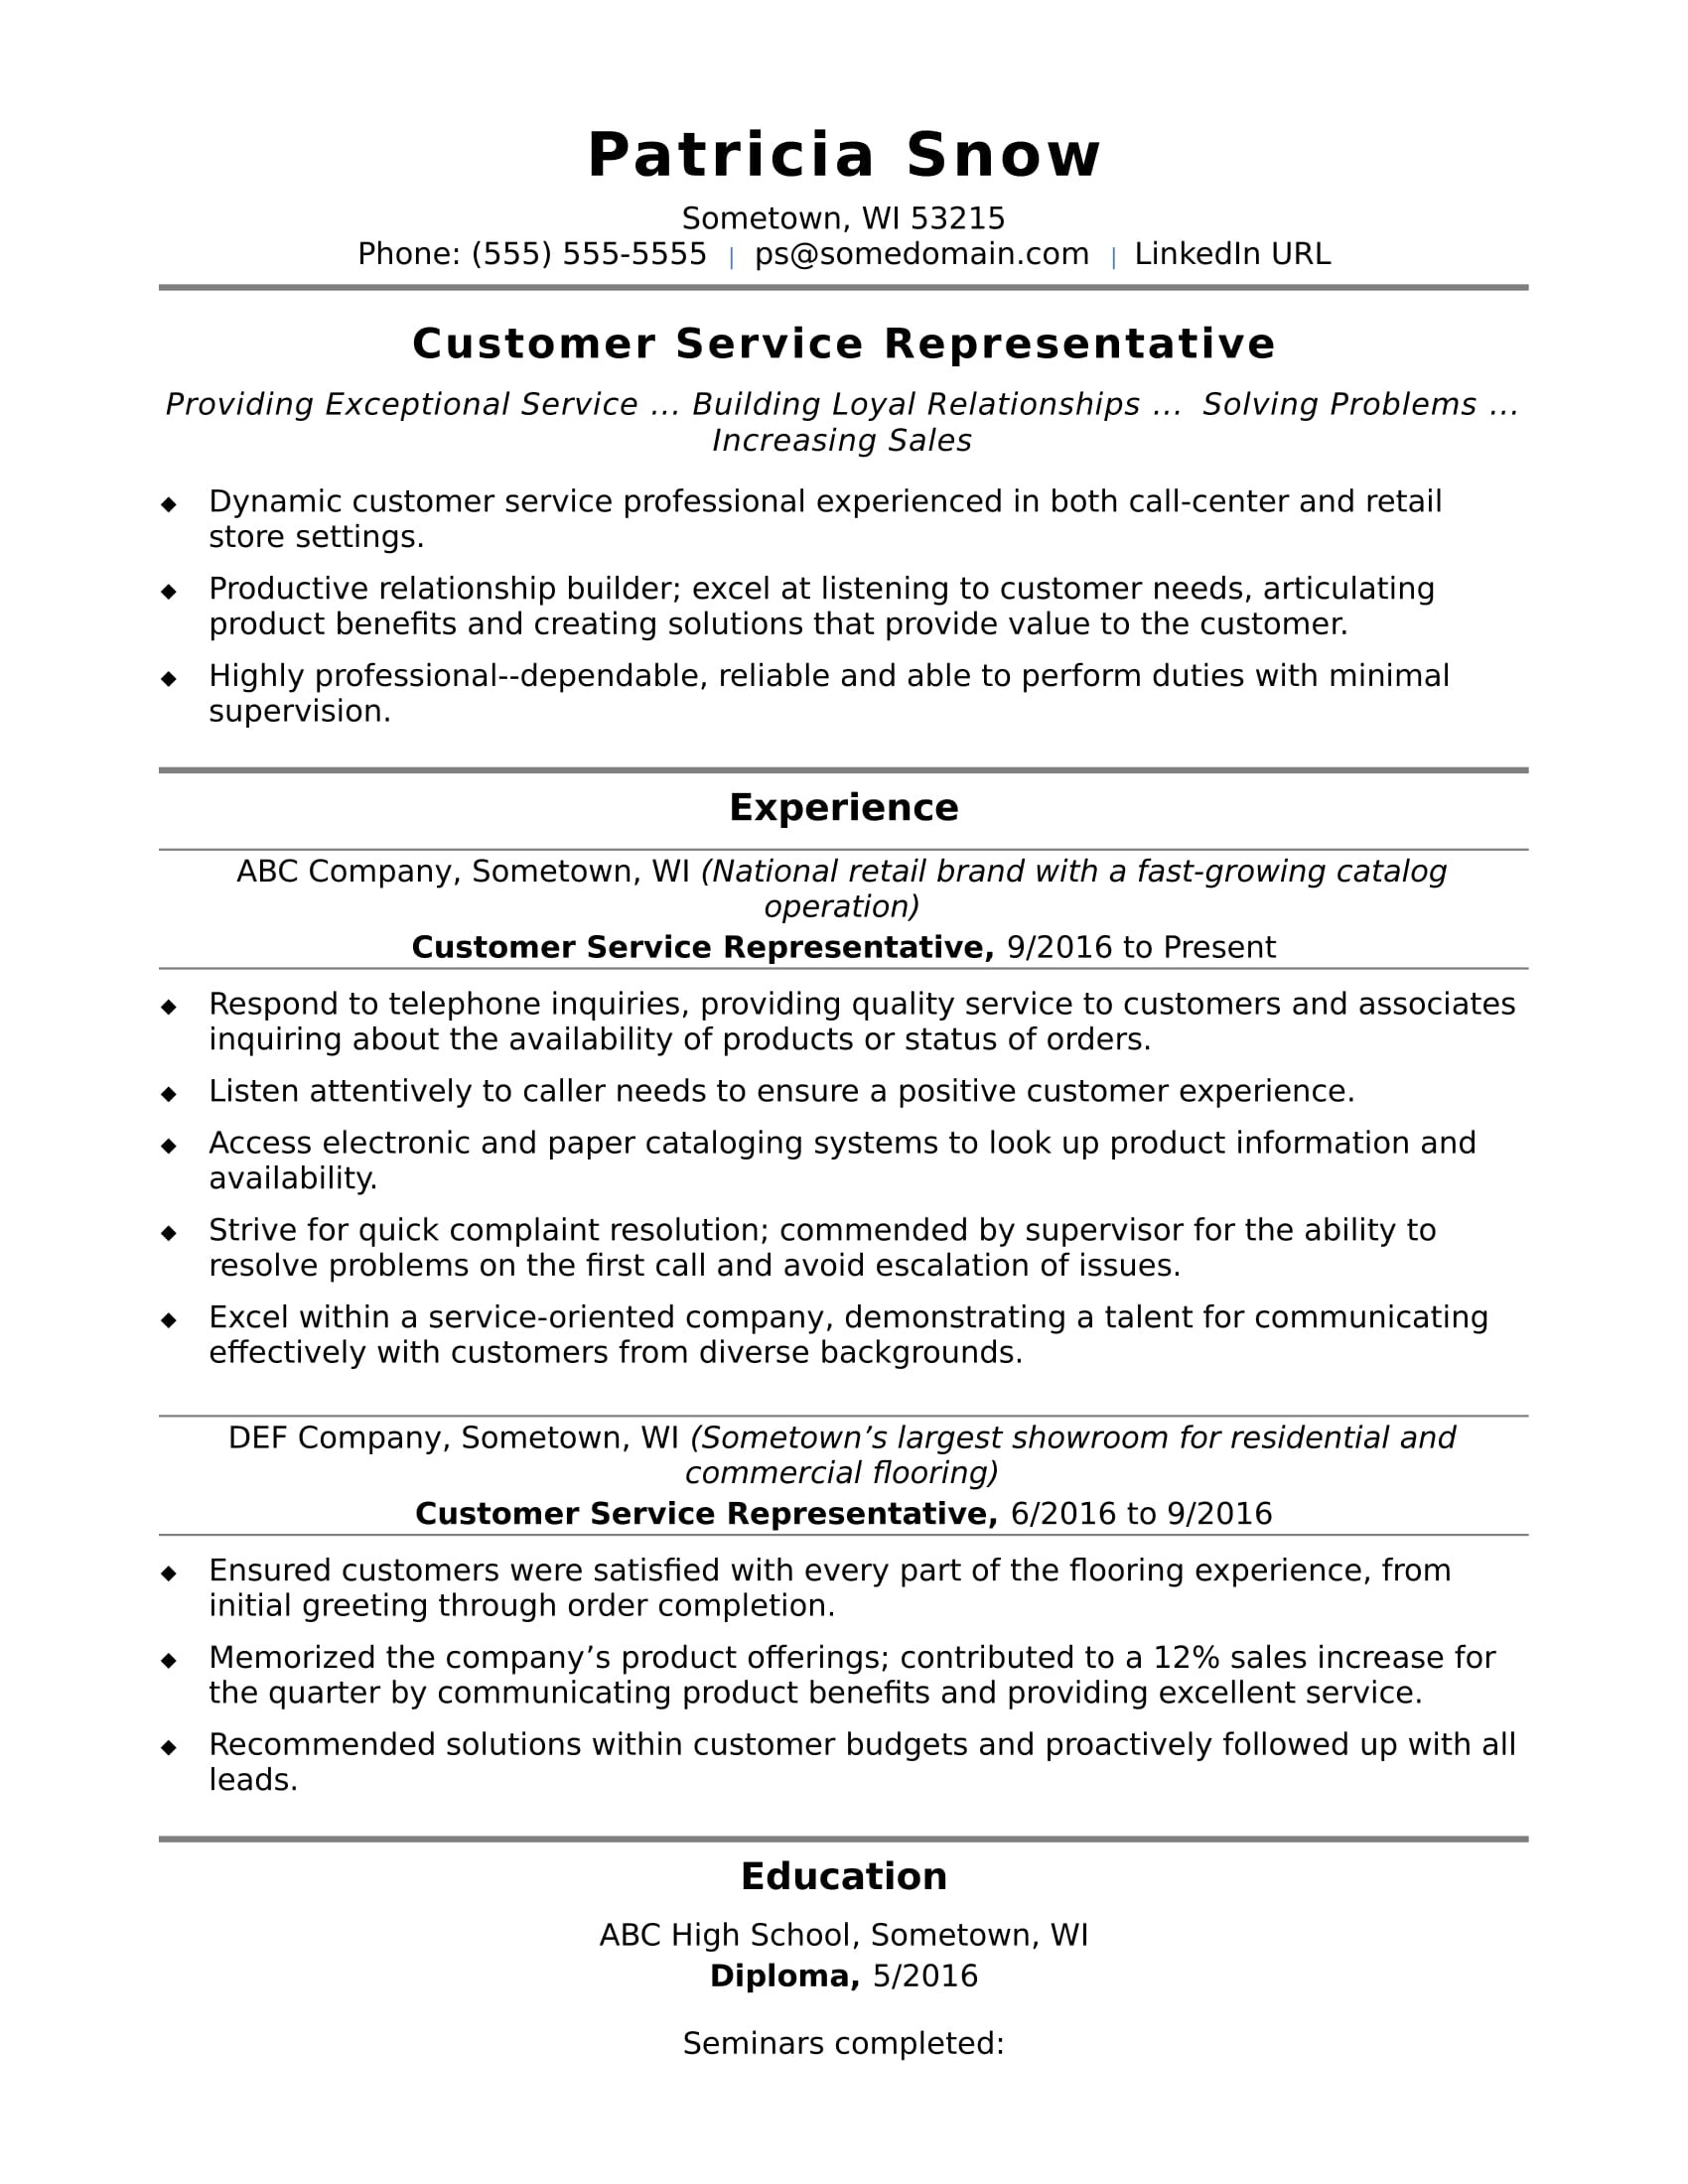 Work Experience Resume Sample Customer Service Customer Service Representative Resume Sample Monster.com